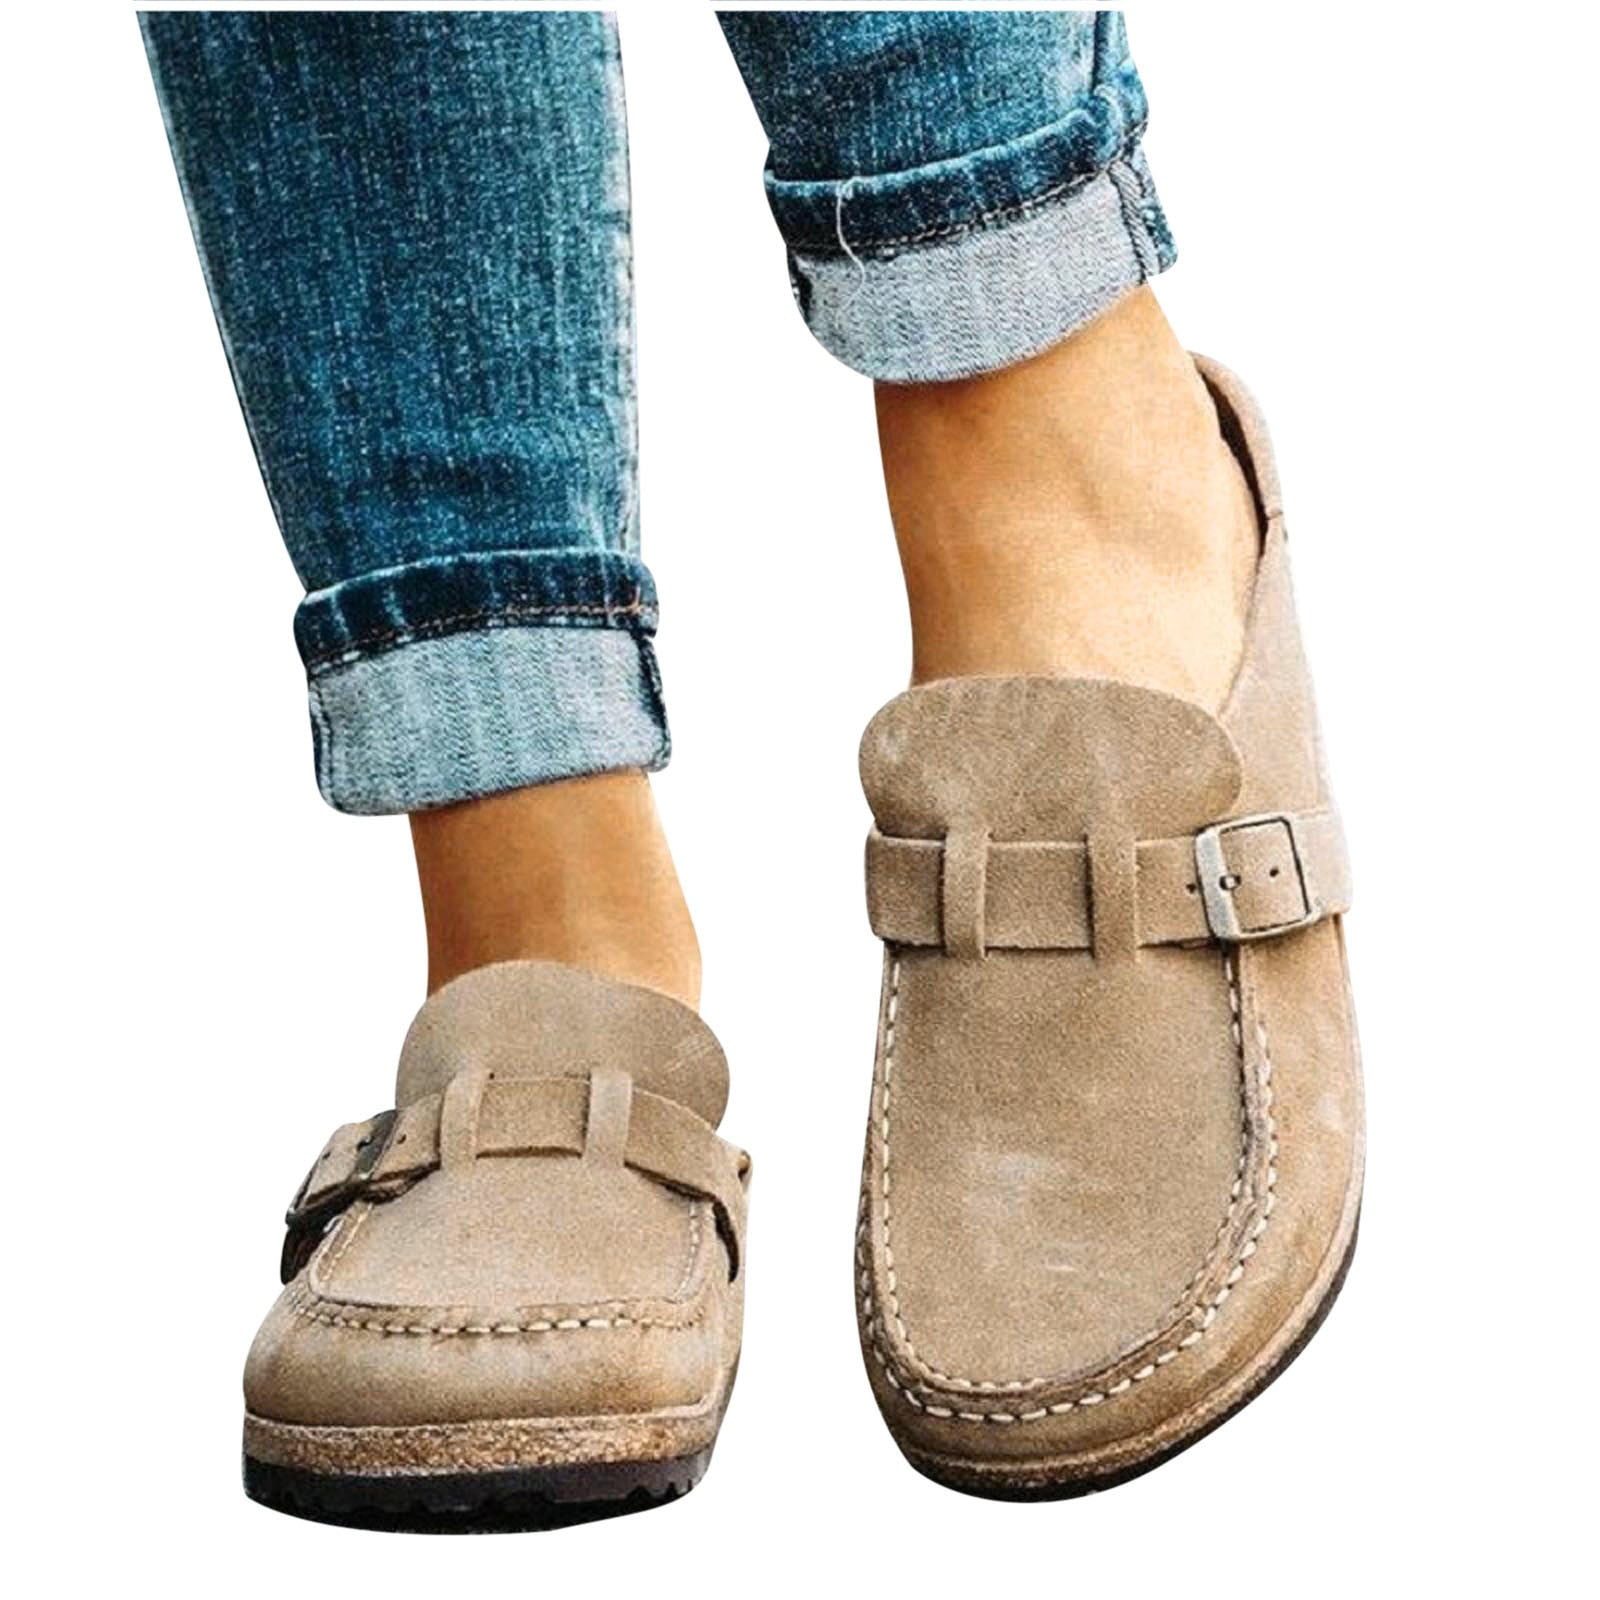 Buy Emptio Outdoor Sandals Men's Fashionable Sabo Sandals Heelless Cool  Green from Japan - Buy authentic Plus exclusive items from Japan | ZenPlus